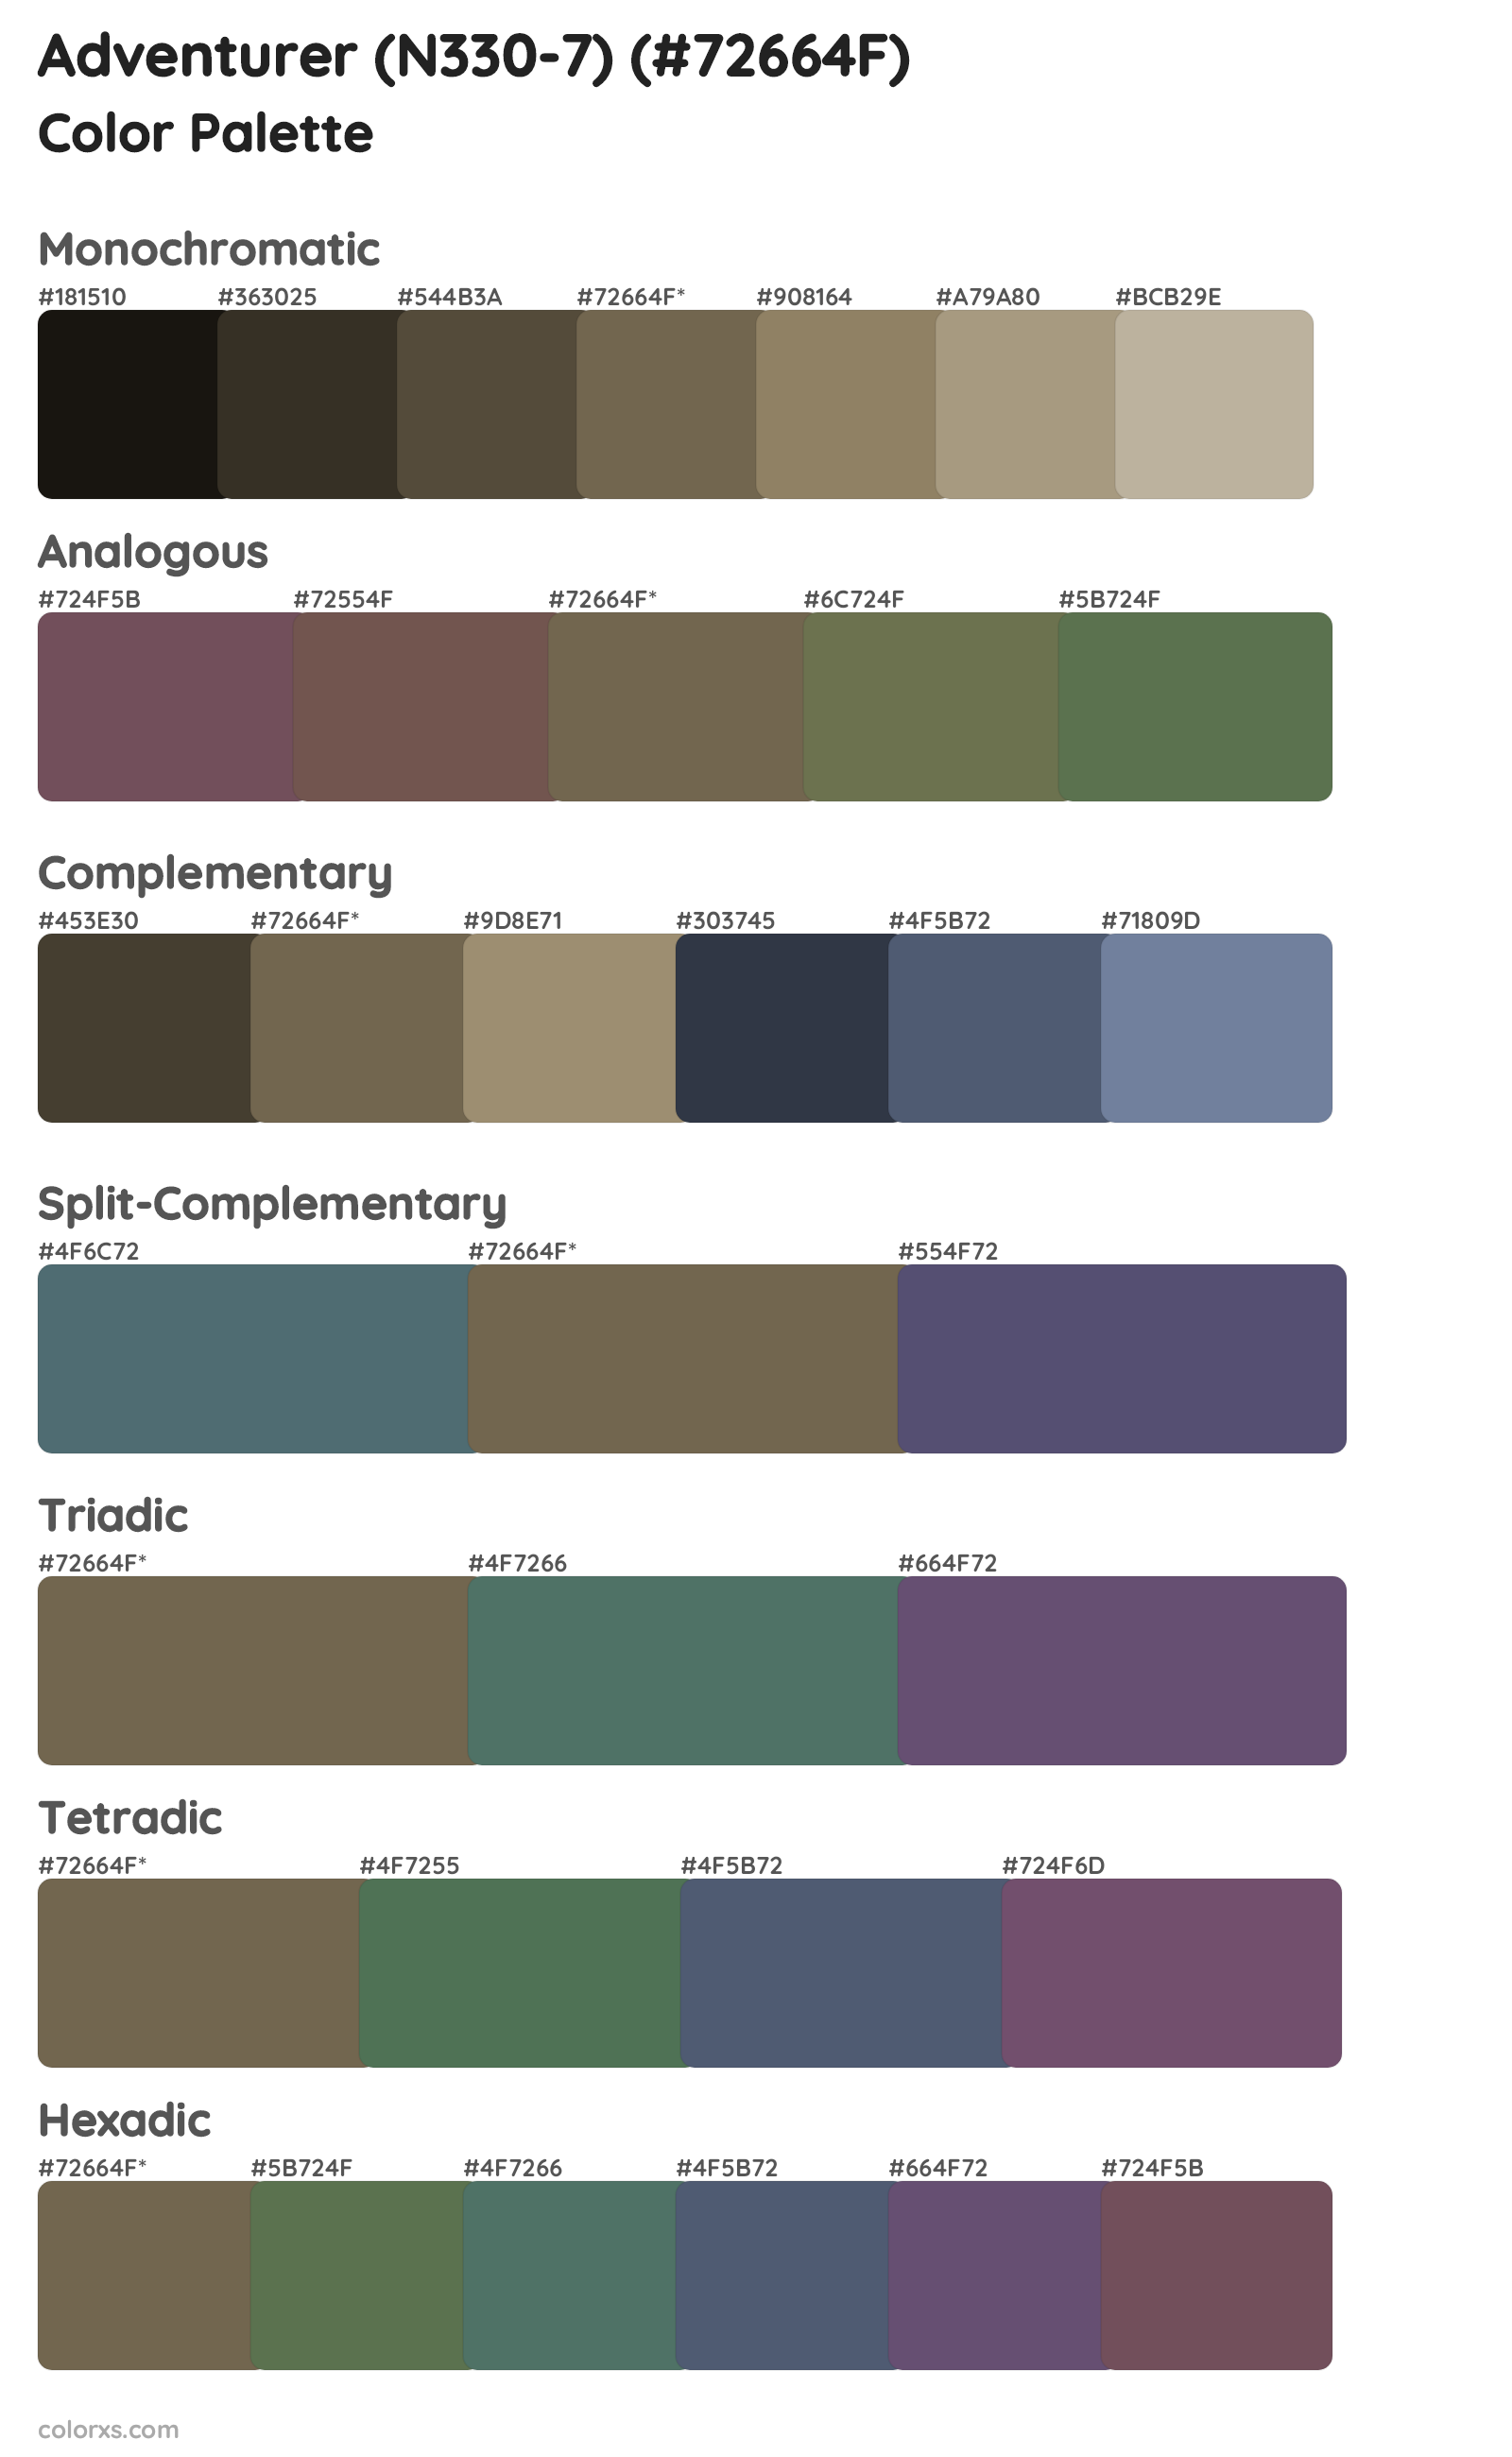 Adventurer (N330-7) Color Scheme Palettes